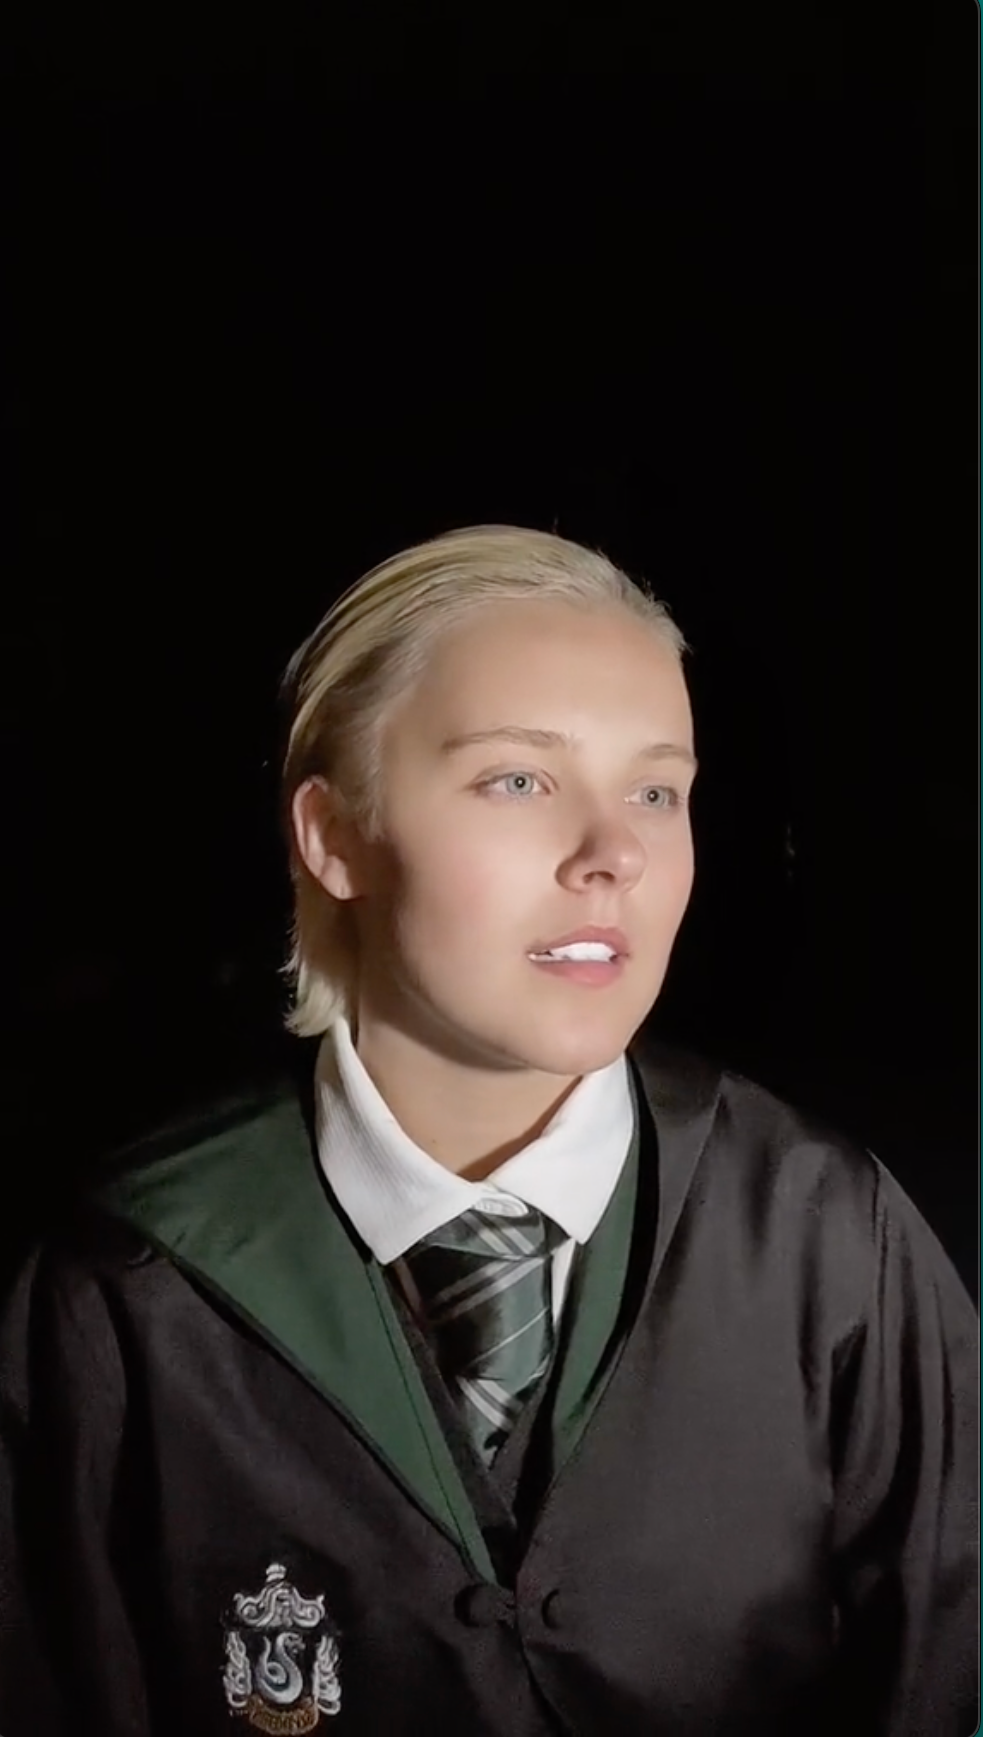 JoJo Siwa Dresses as Harry Potter Villain Draco Malfoy for Halloween